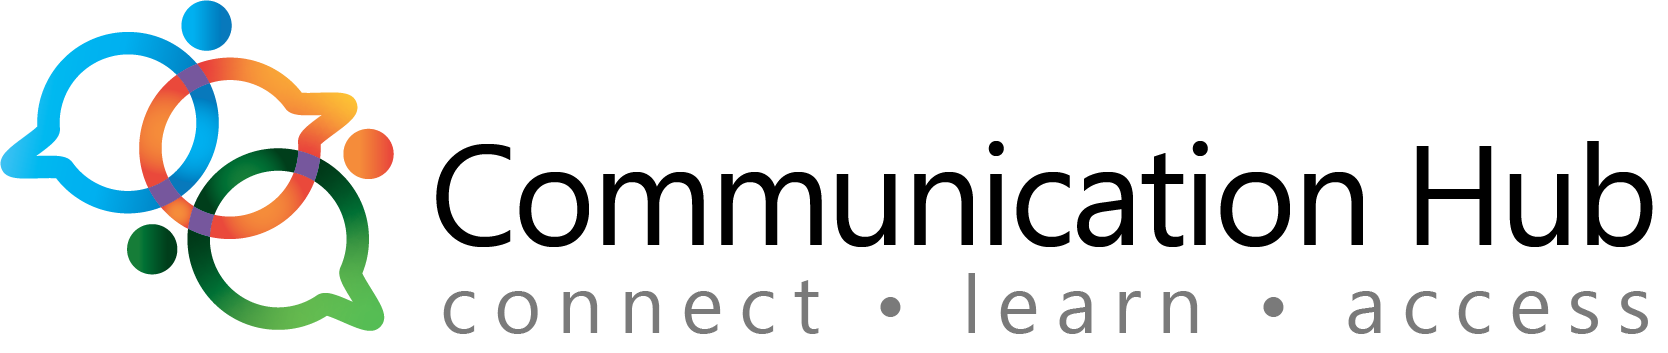 Communication Hub logo